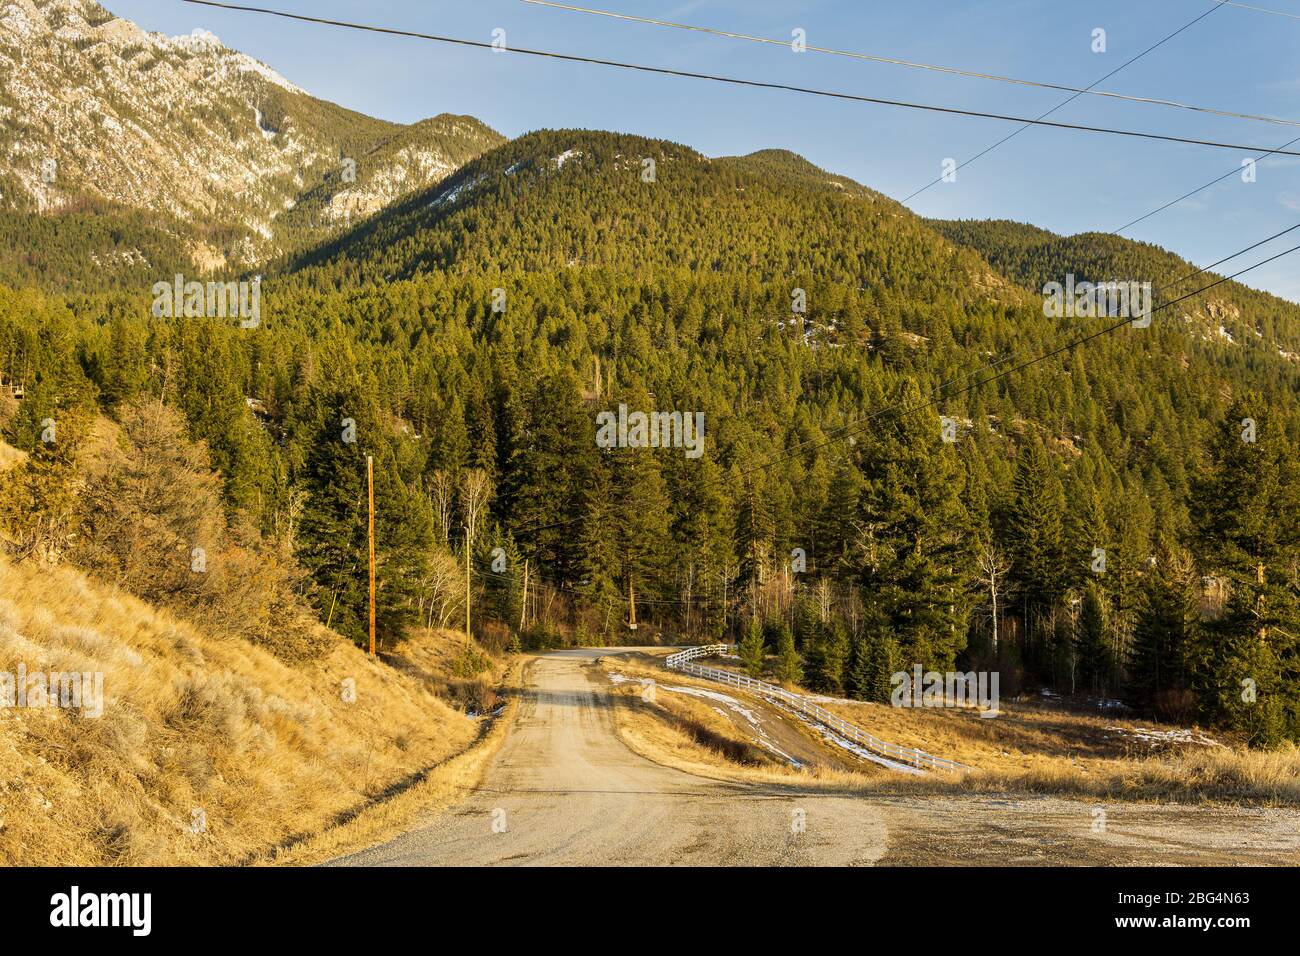 Straße zu felsigen Bergen und blauem Himmel East Kootenay british columbia kanada. Stockfoto